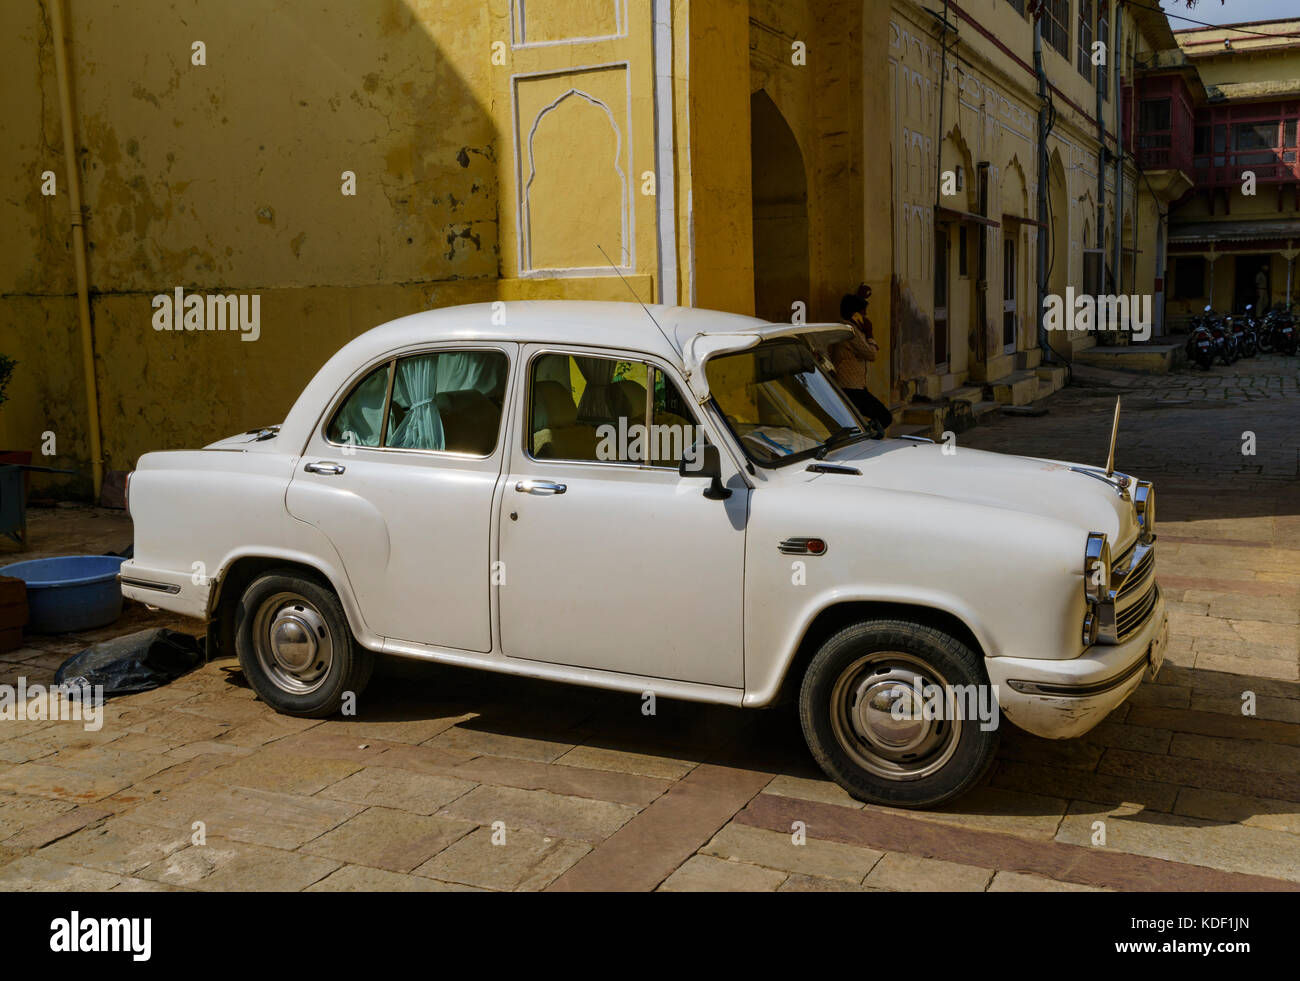 An Austin Ambassador car in a Royal Palace in Jaipur, India Stock Photo